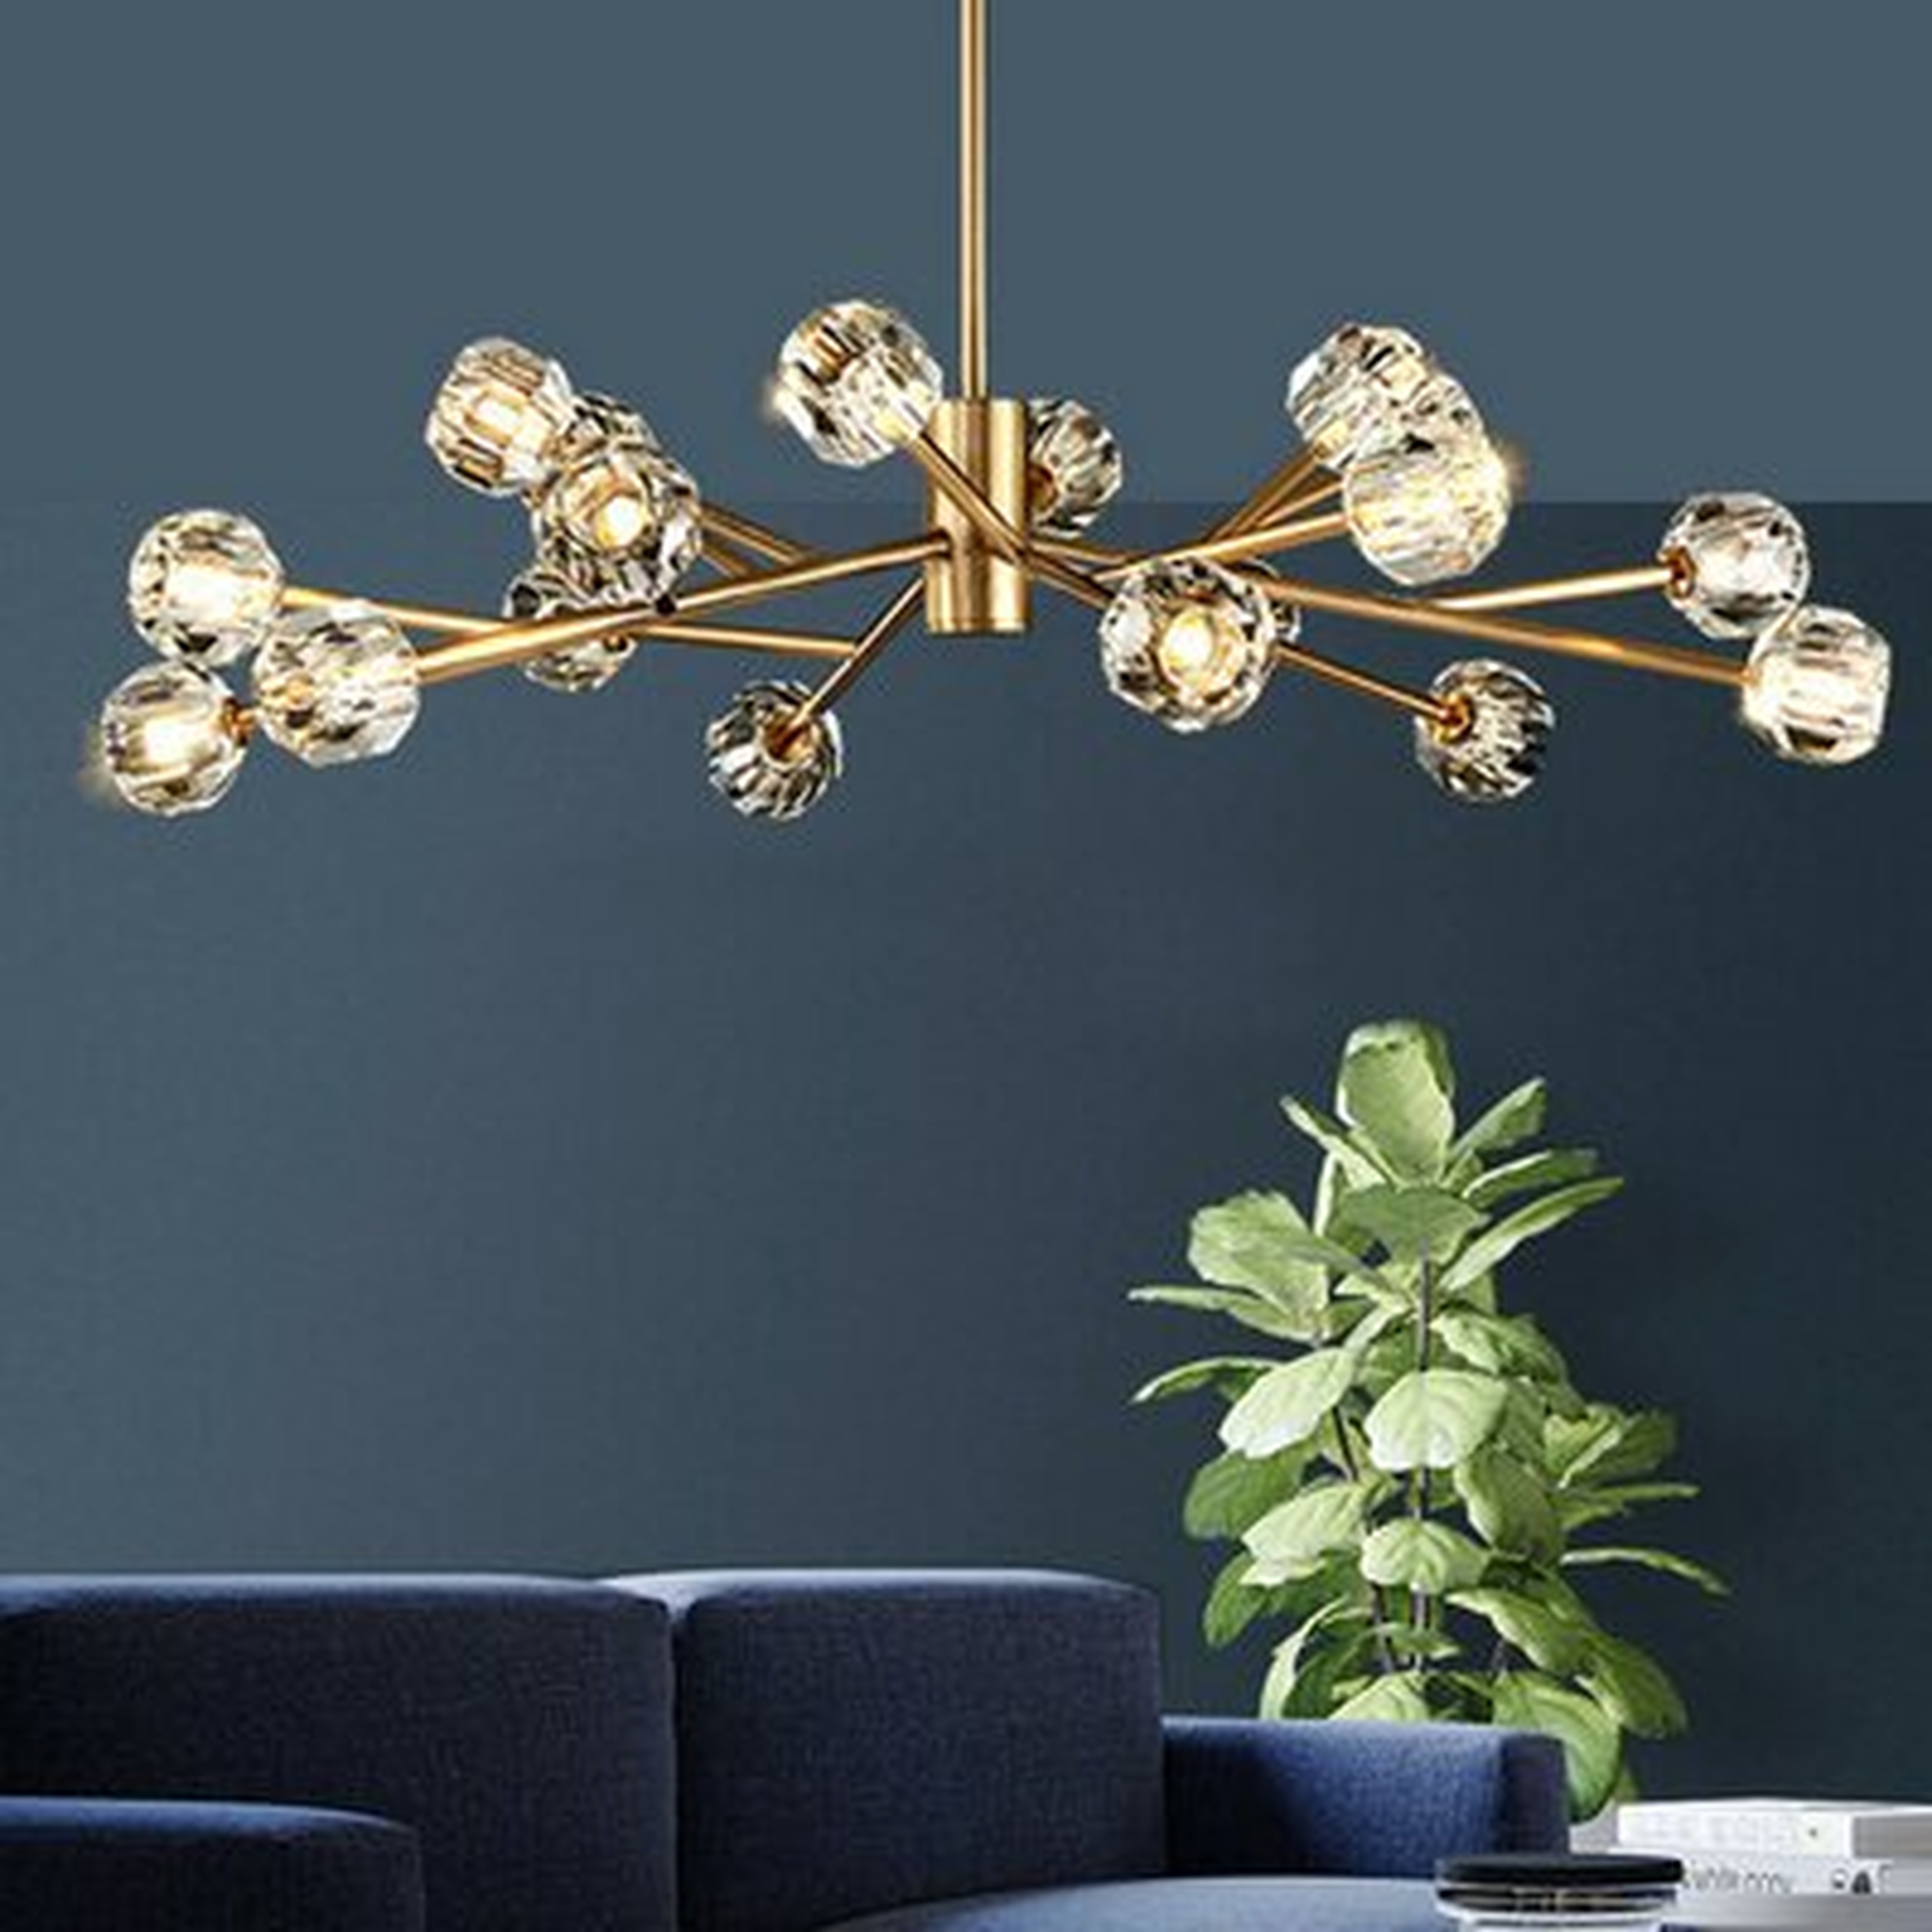 Mcclay Modern 18-Light Sputnik Chandelier Gold Pendant Ceiling Lamp Fixture Decorate - Wayfair